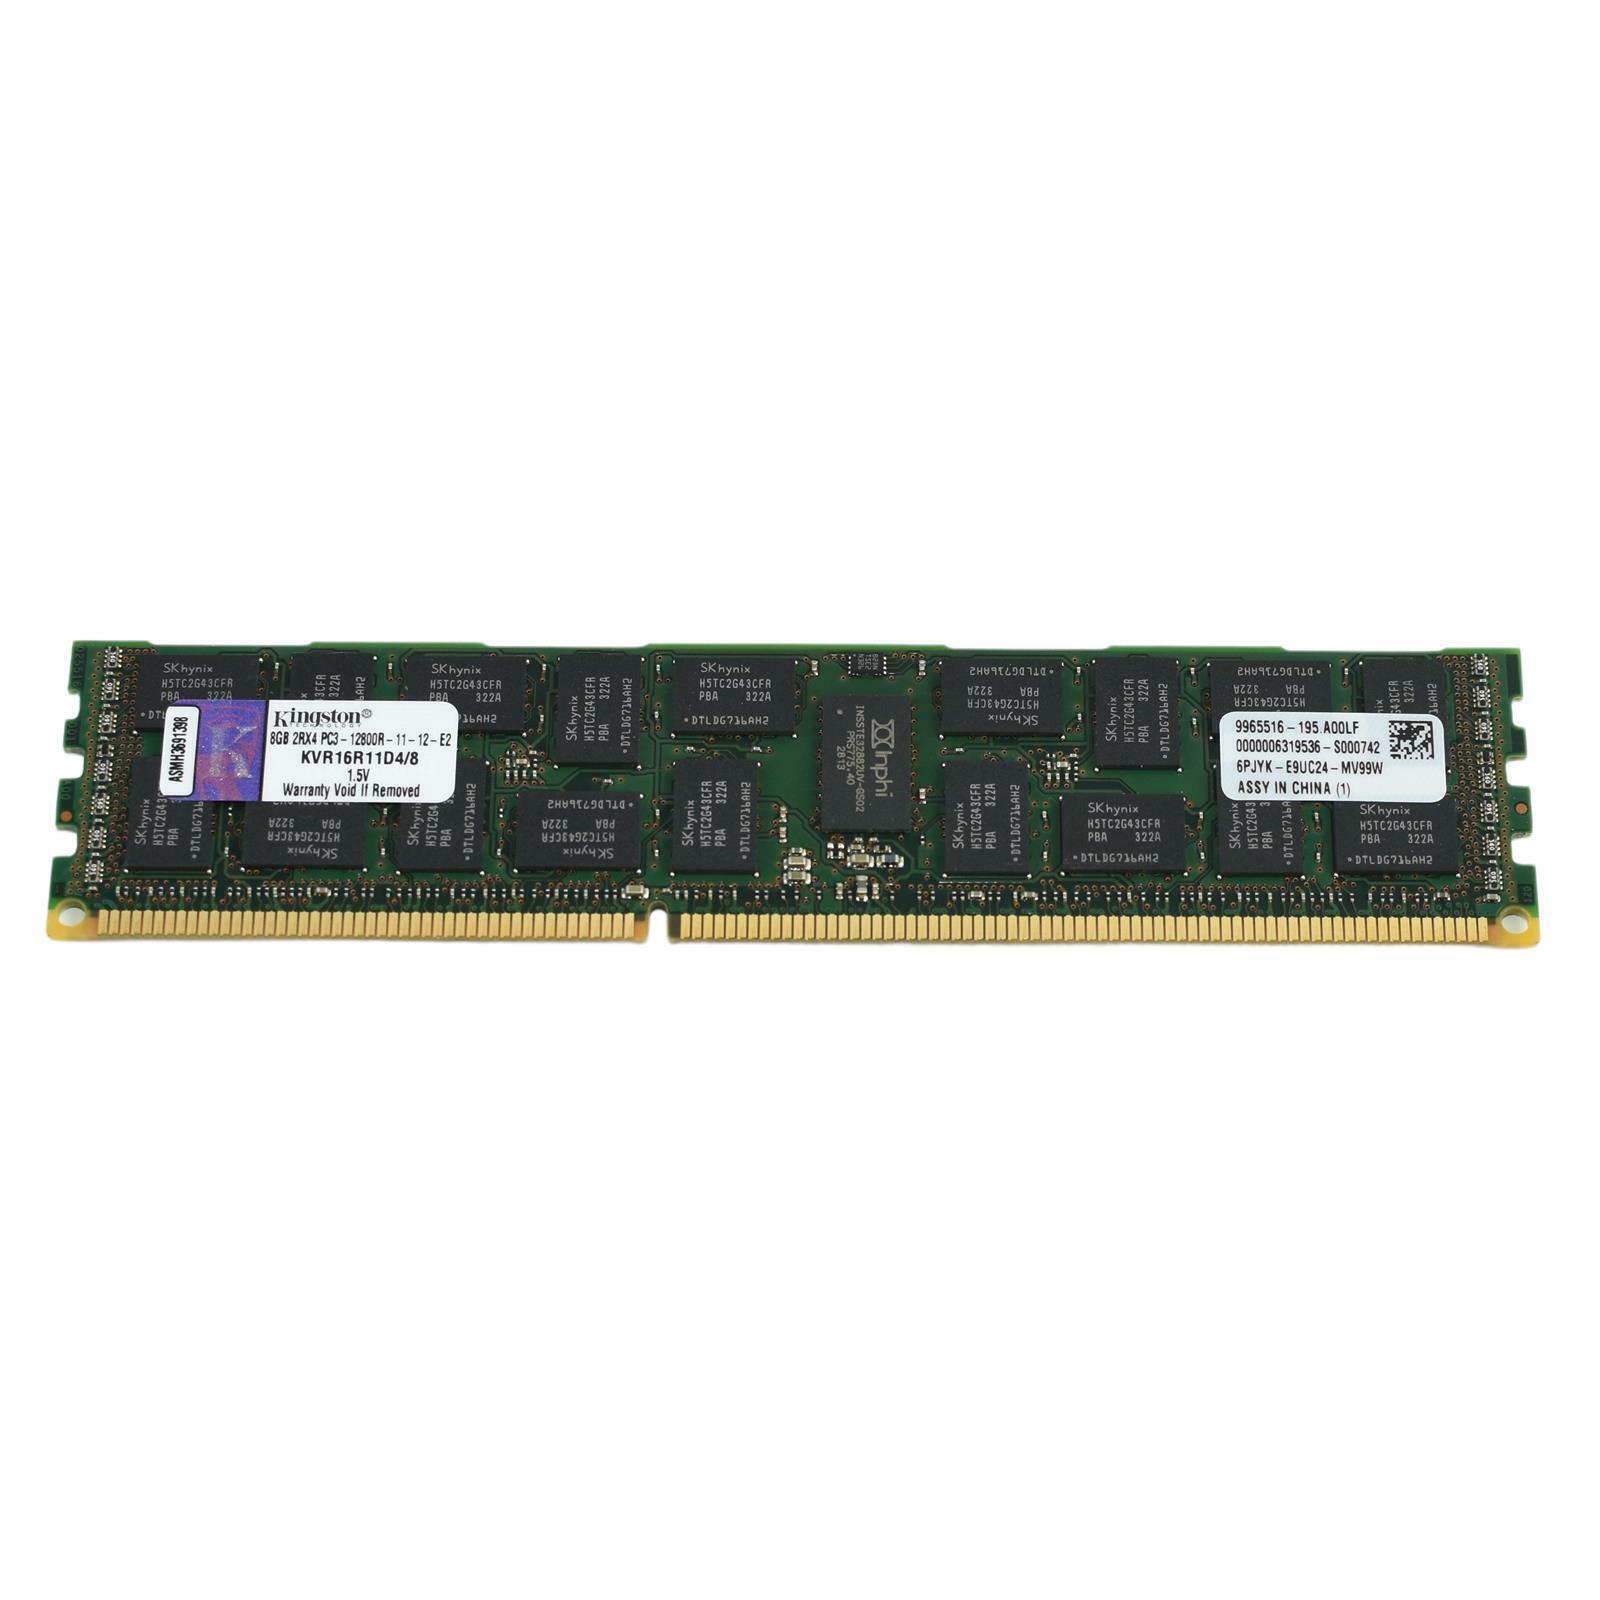 KINGSTON KVR16R11D4/8 8GB 2Rx4 DDR3-1600 PC3-12800R Registered ECC Memory Module